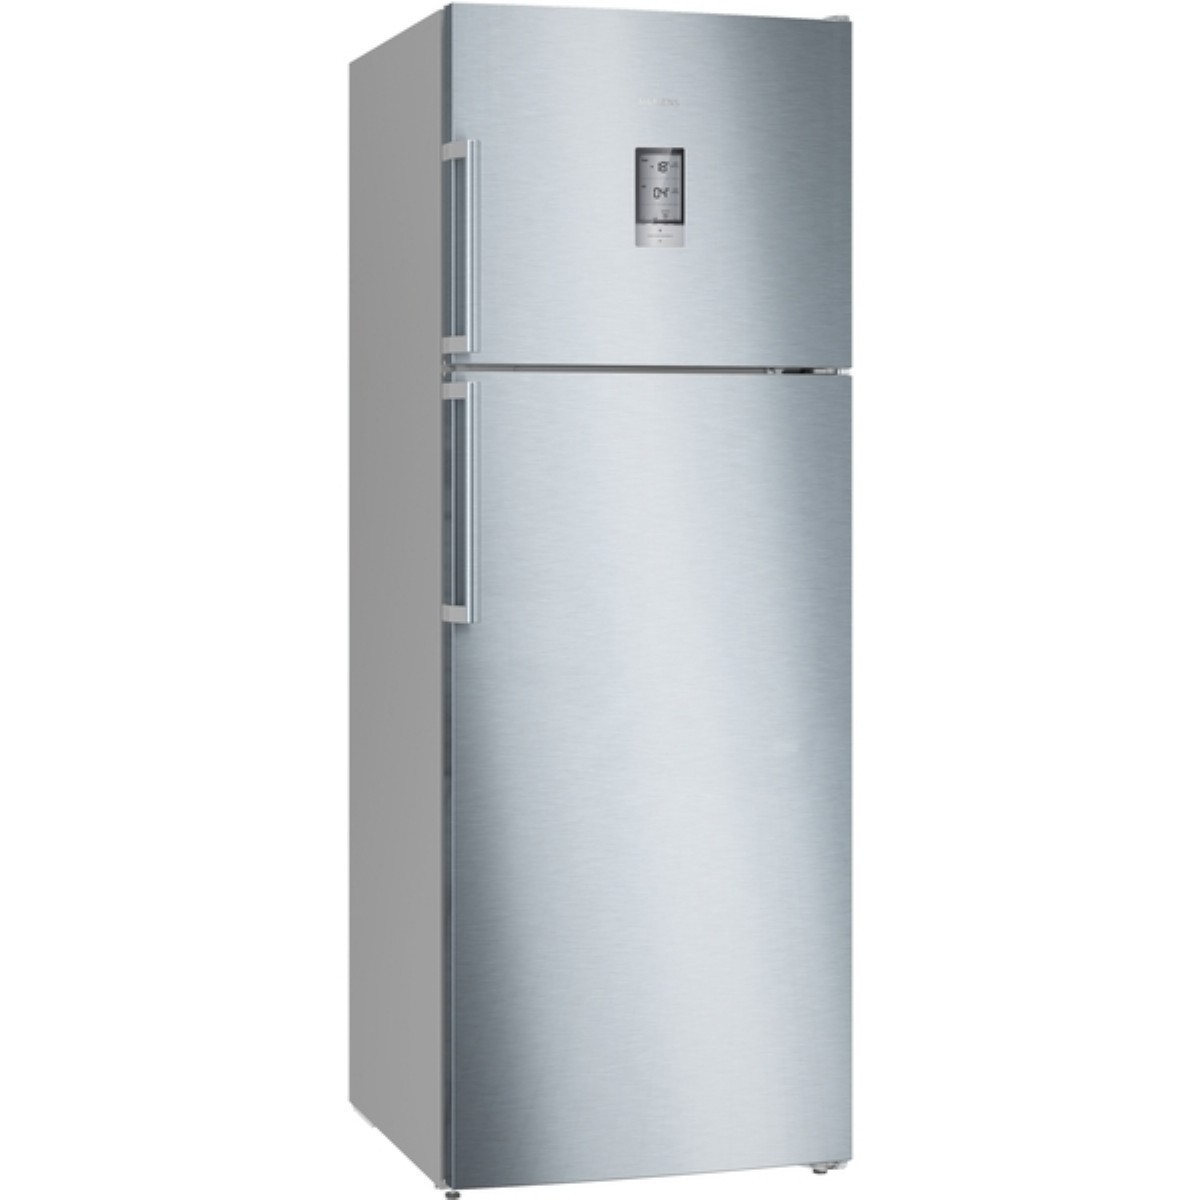 Buzdolabı | Siemens KD56NHID1N Çift Kapılı No Frost Buzdolabı | KD56NHID1N | Siemens KD56NHID1N Çift Kapılı No Frost Buzdolabı, kd56nhid1n, kd56nhıd1n, KD56NHID1N, home connect buzdolabı, siemens home connect | 